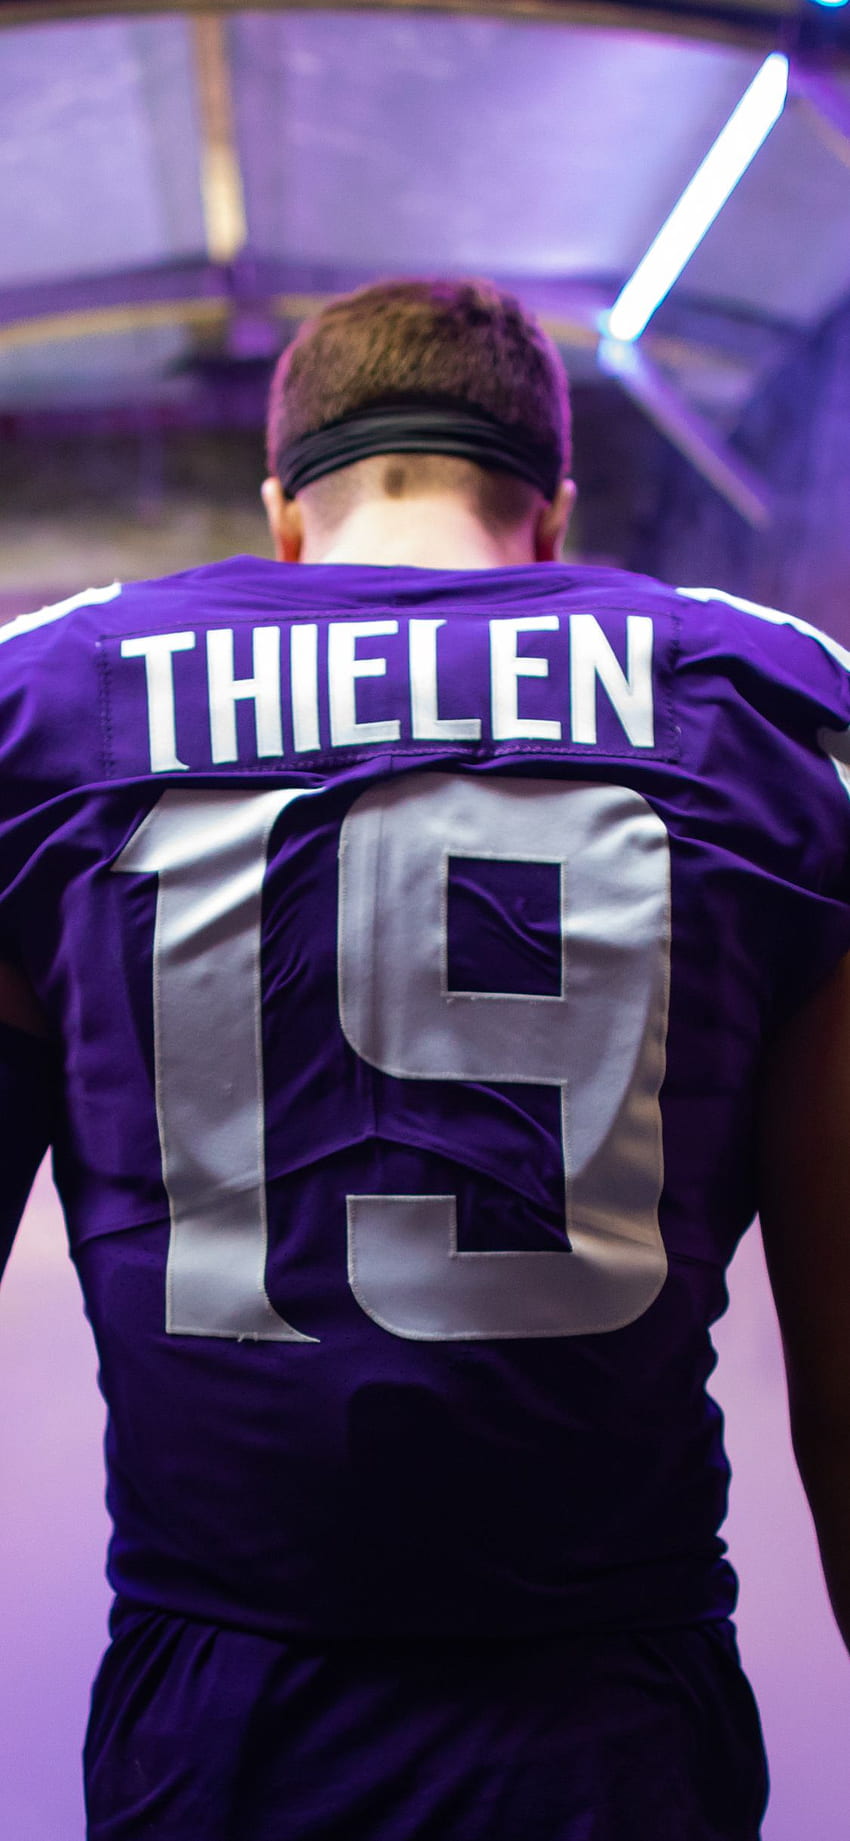 Móvil - Sitio web oficial de los Minnesota Vikings, Adam Thielen fondo de pantalla del teléfono